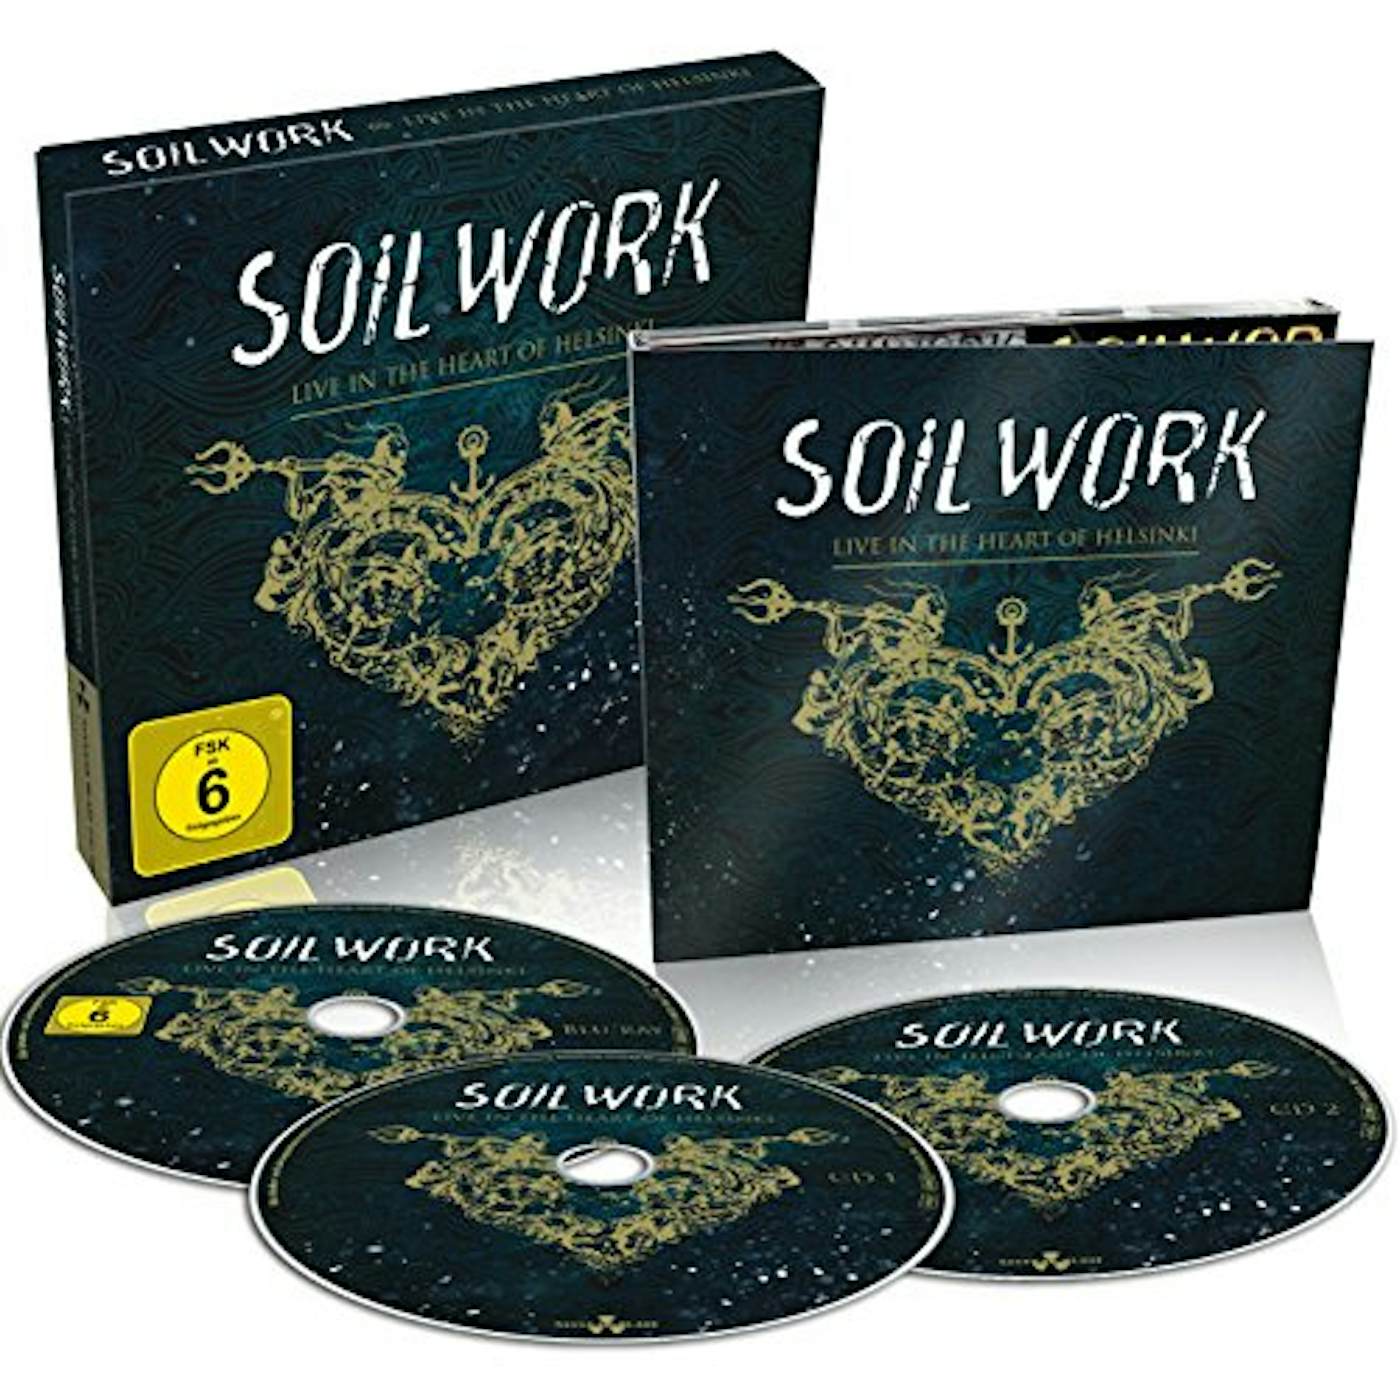 Soilwork LIVE IN THE HEART OF HELSINKI CD